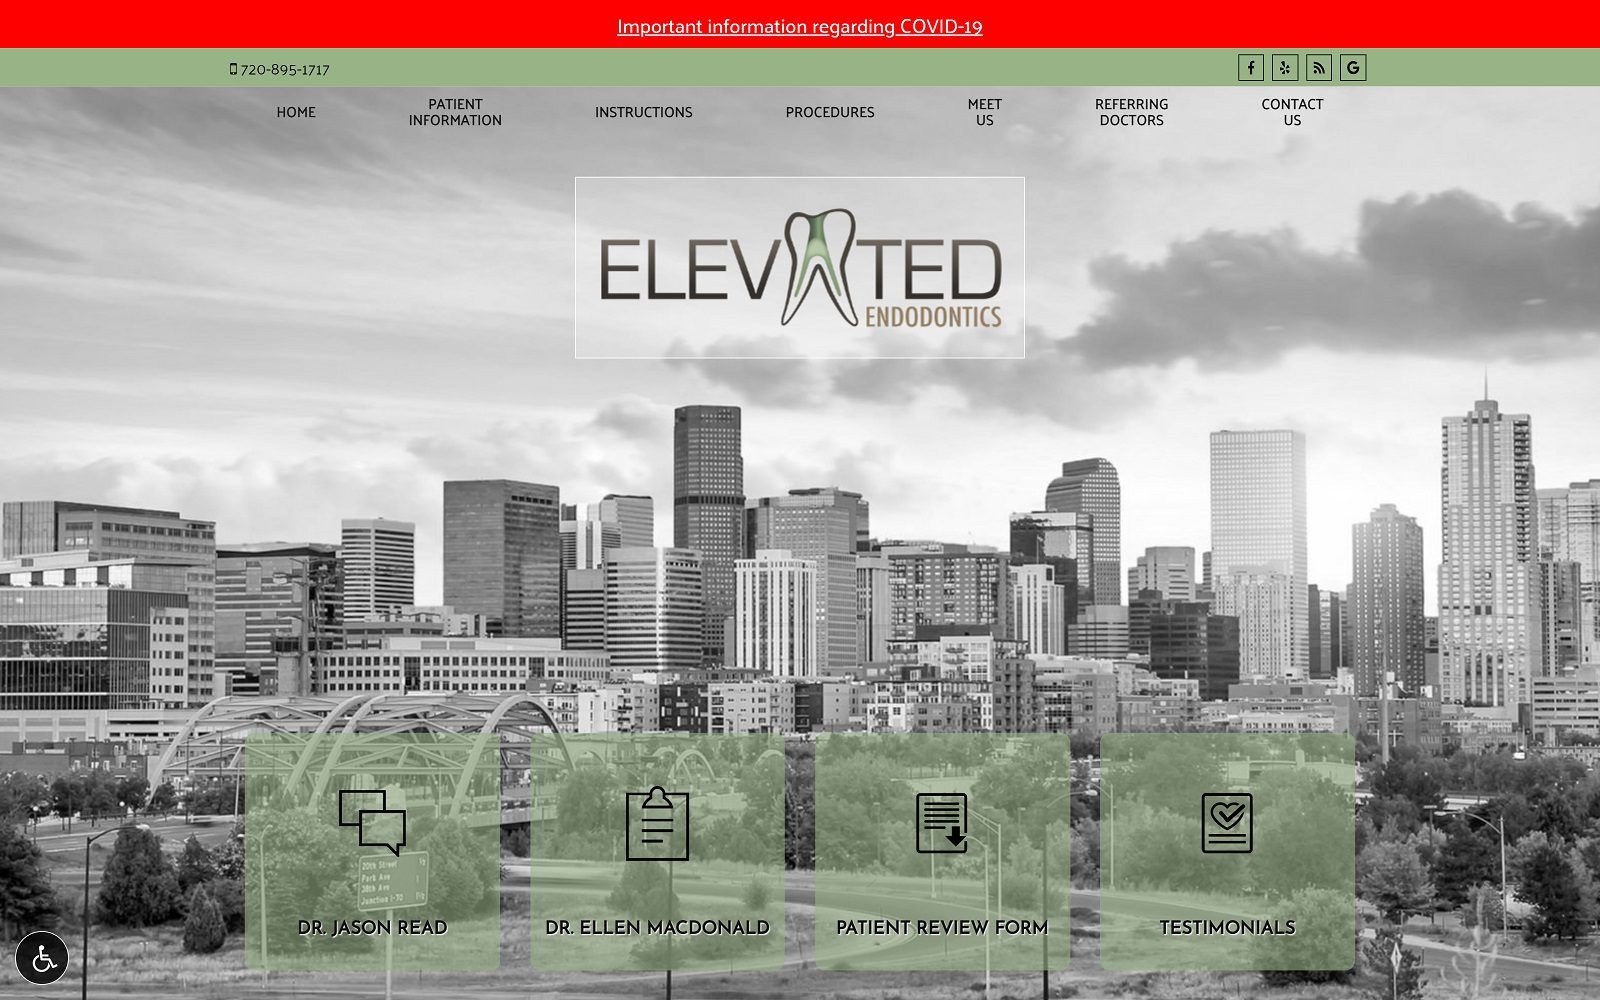 The screenshot of elevated endodontics website